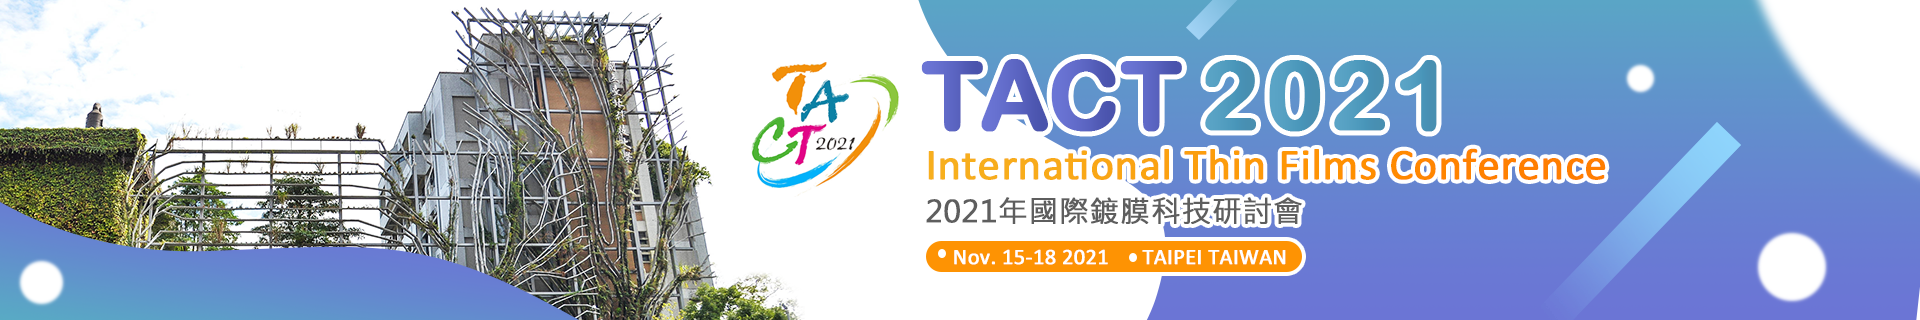 TACT 2021 banner